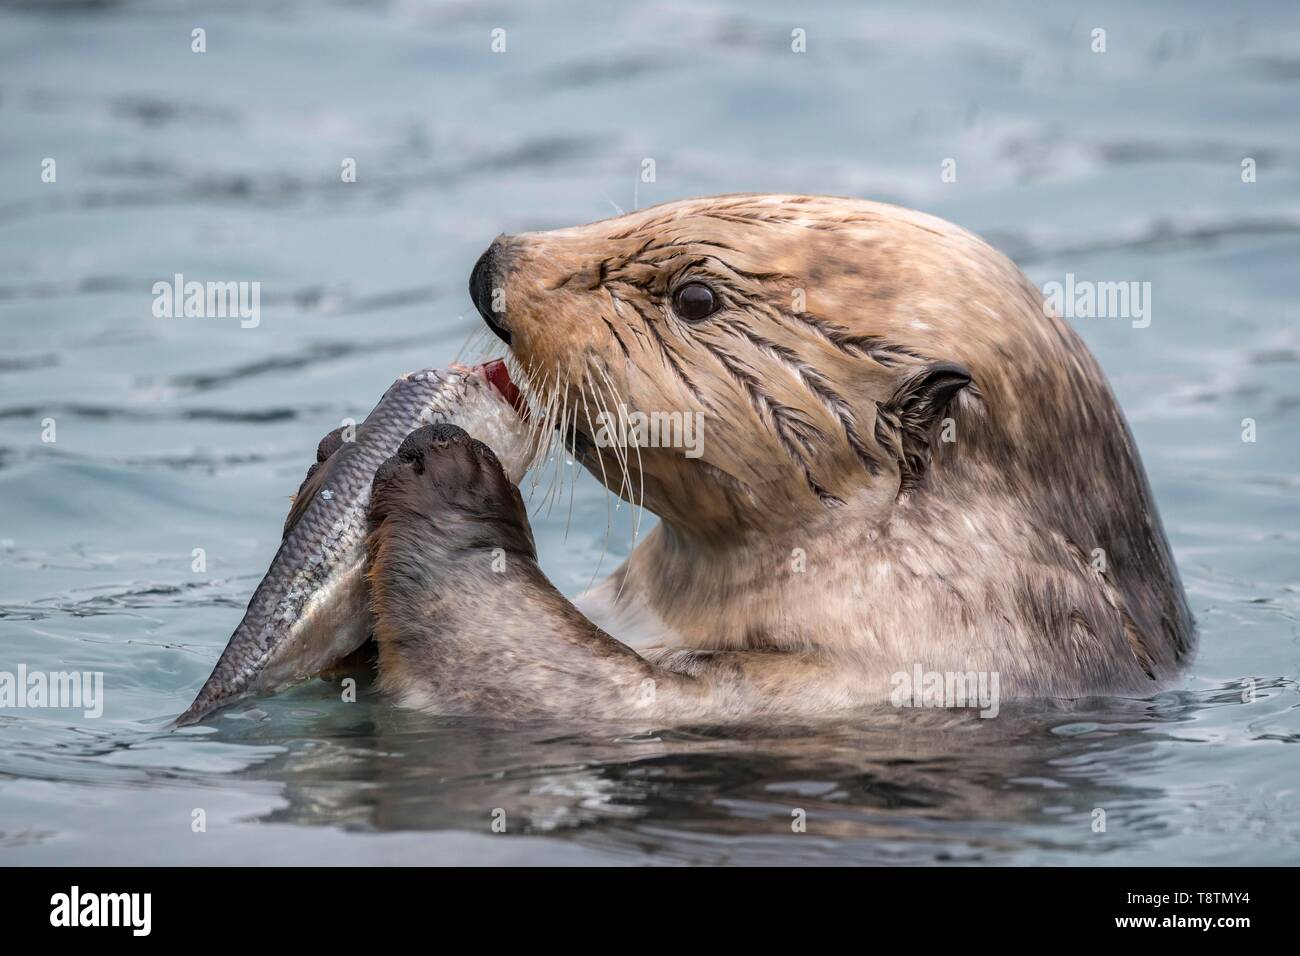 Seeotter (Enhydra lutris) isst Fisch, Tier portrait in Wasser, Seward, Alaska, USA Stockfoto